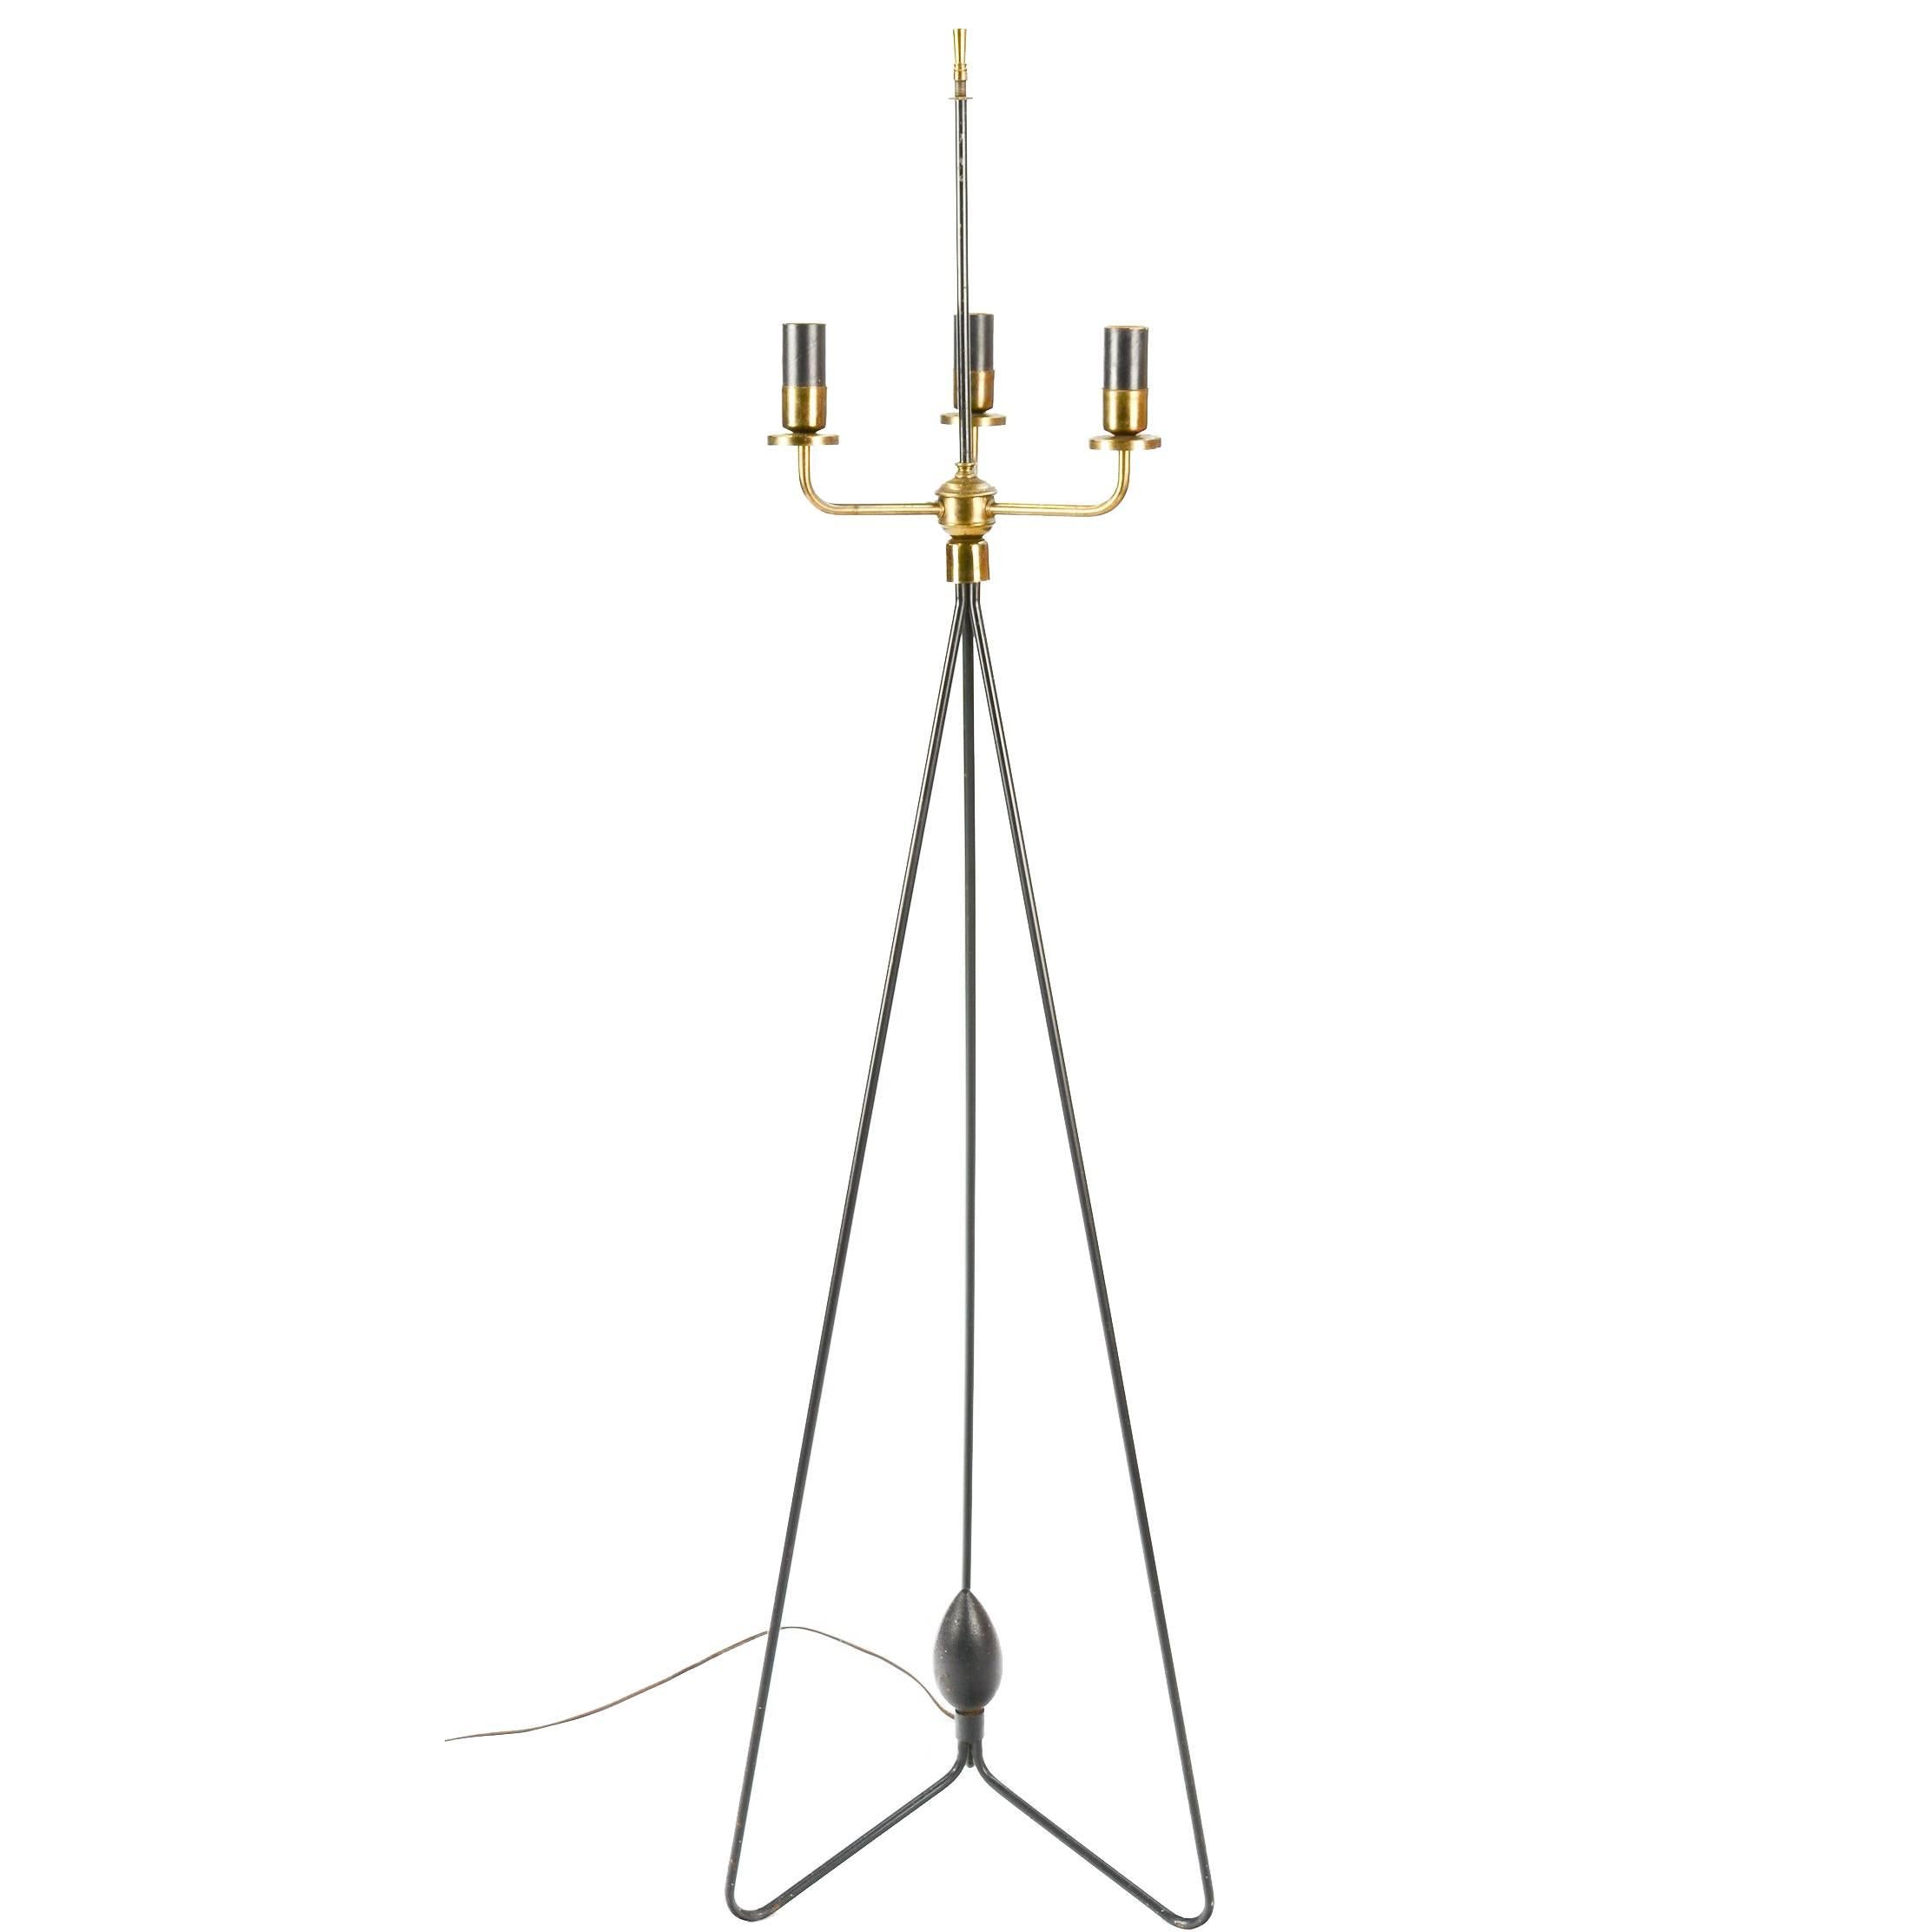 Rare and Elegant Gerald Thurston Iron Tripod Floor Lamp with Acorn Centerpiece